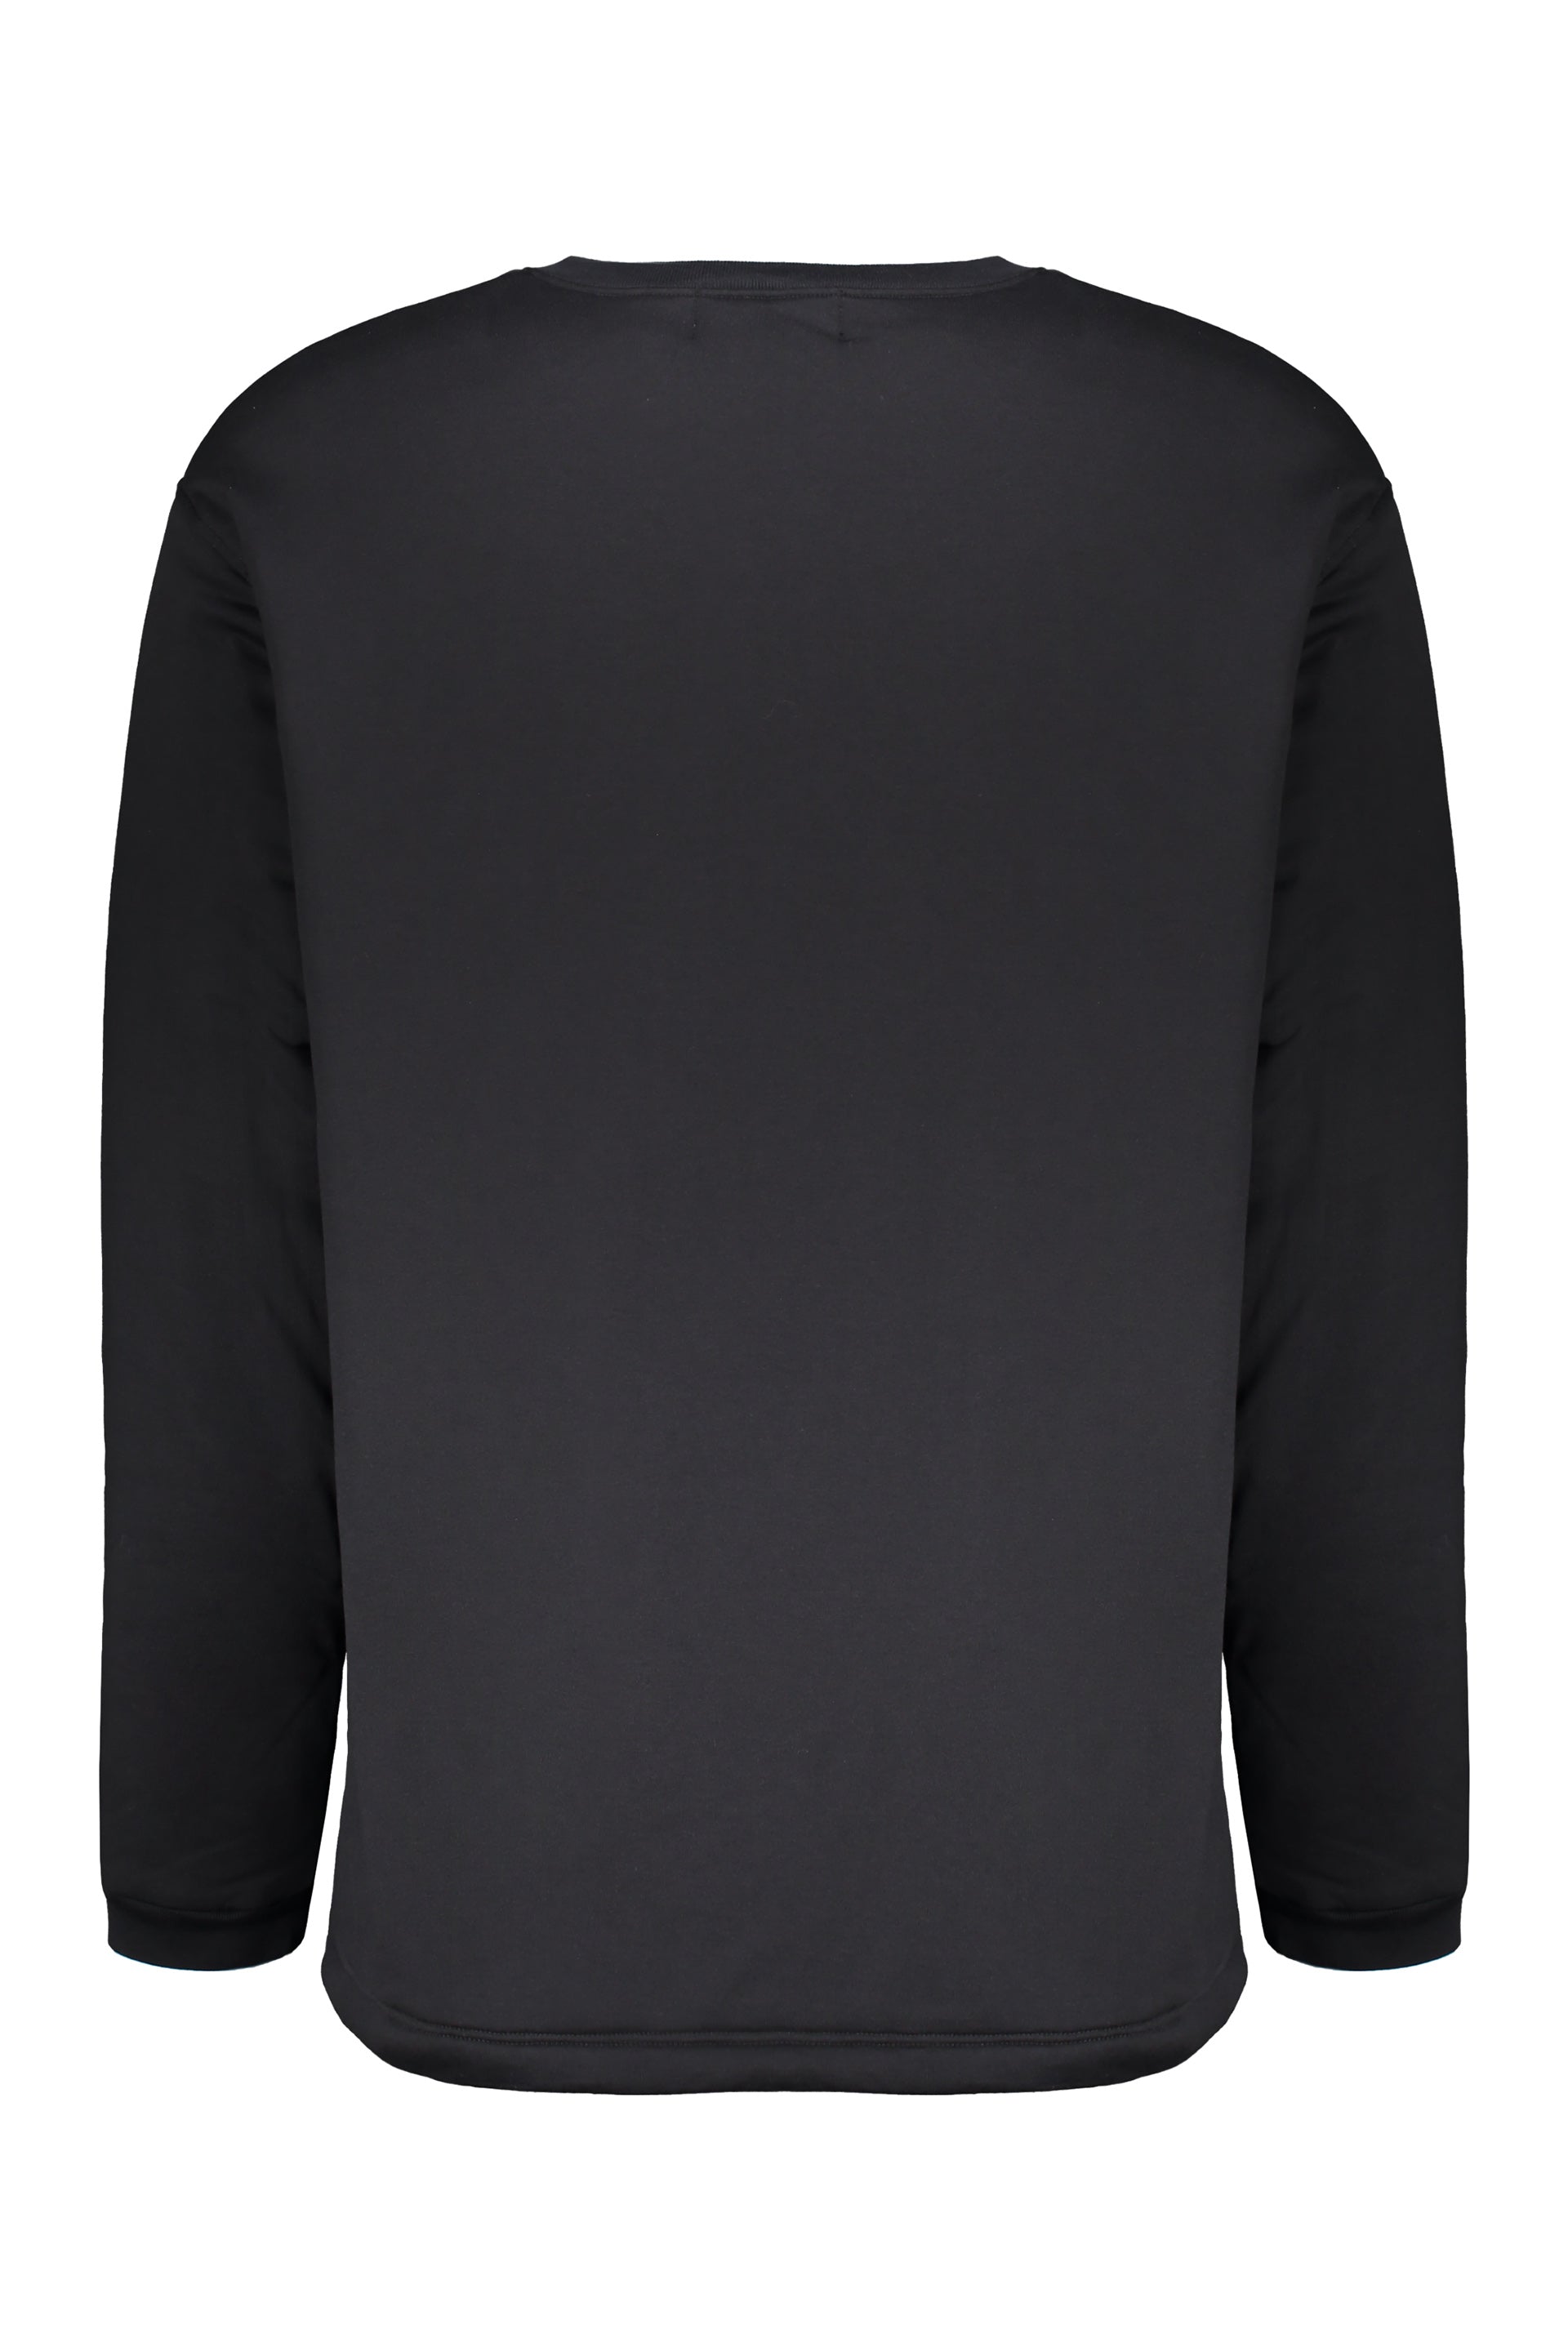 AMBUSH-OUTLET-SALE-Cotton-maxi-T-shirt-Shirts-S-ARCHIVE-COLLECTION-2_f88a1db4-002e-44b6-a591-37b0cb85dced.jpg